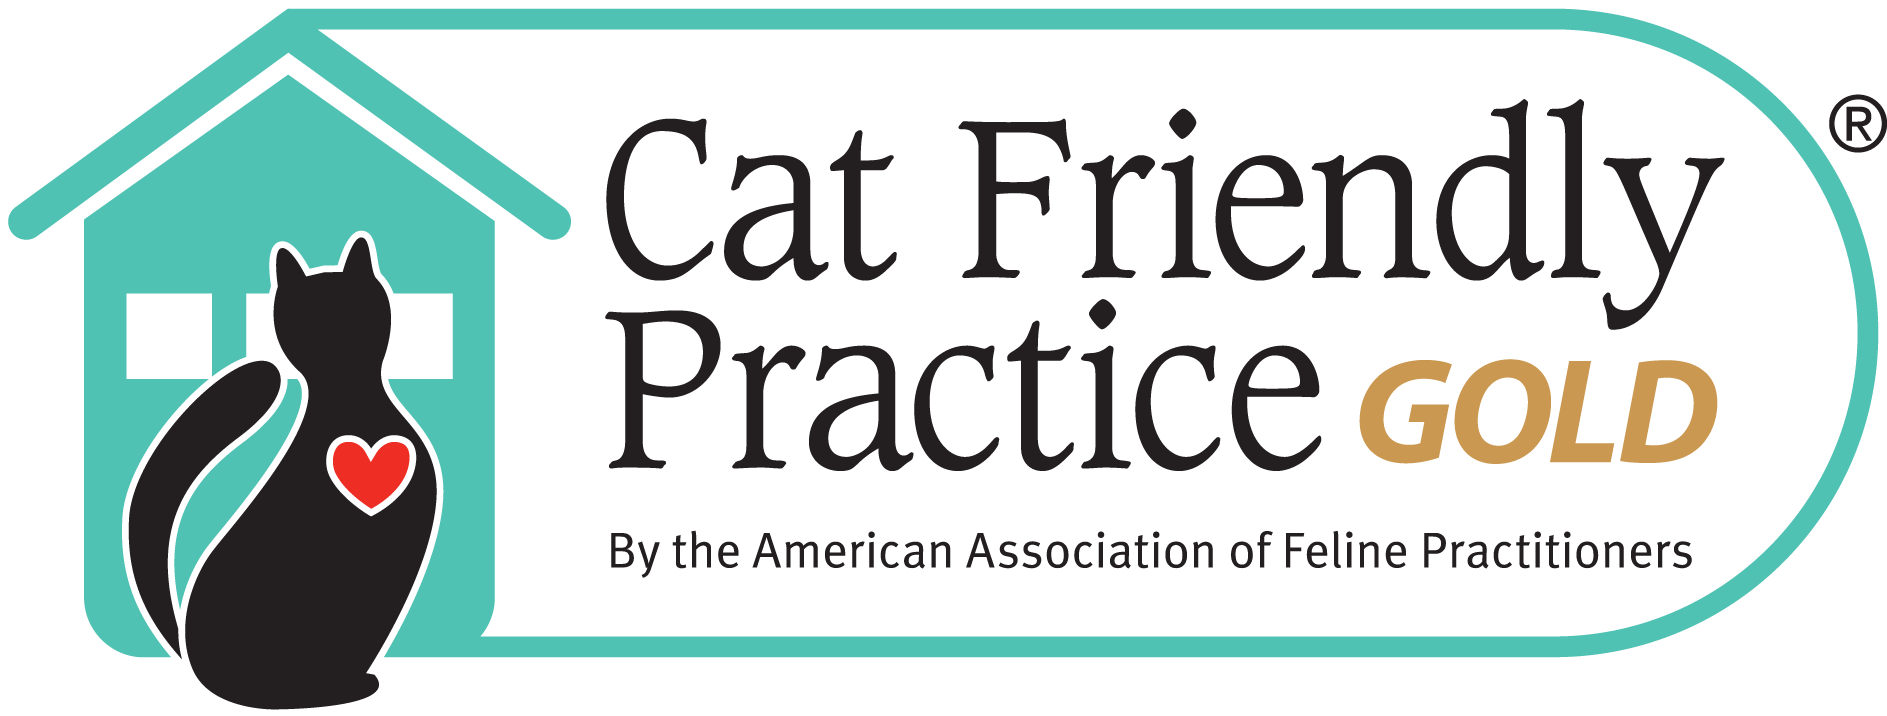 cat friendly practice gold logo